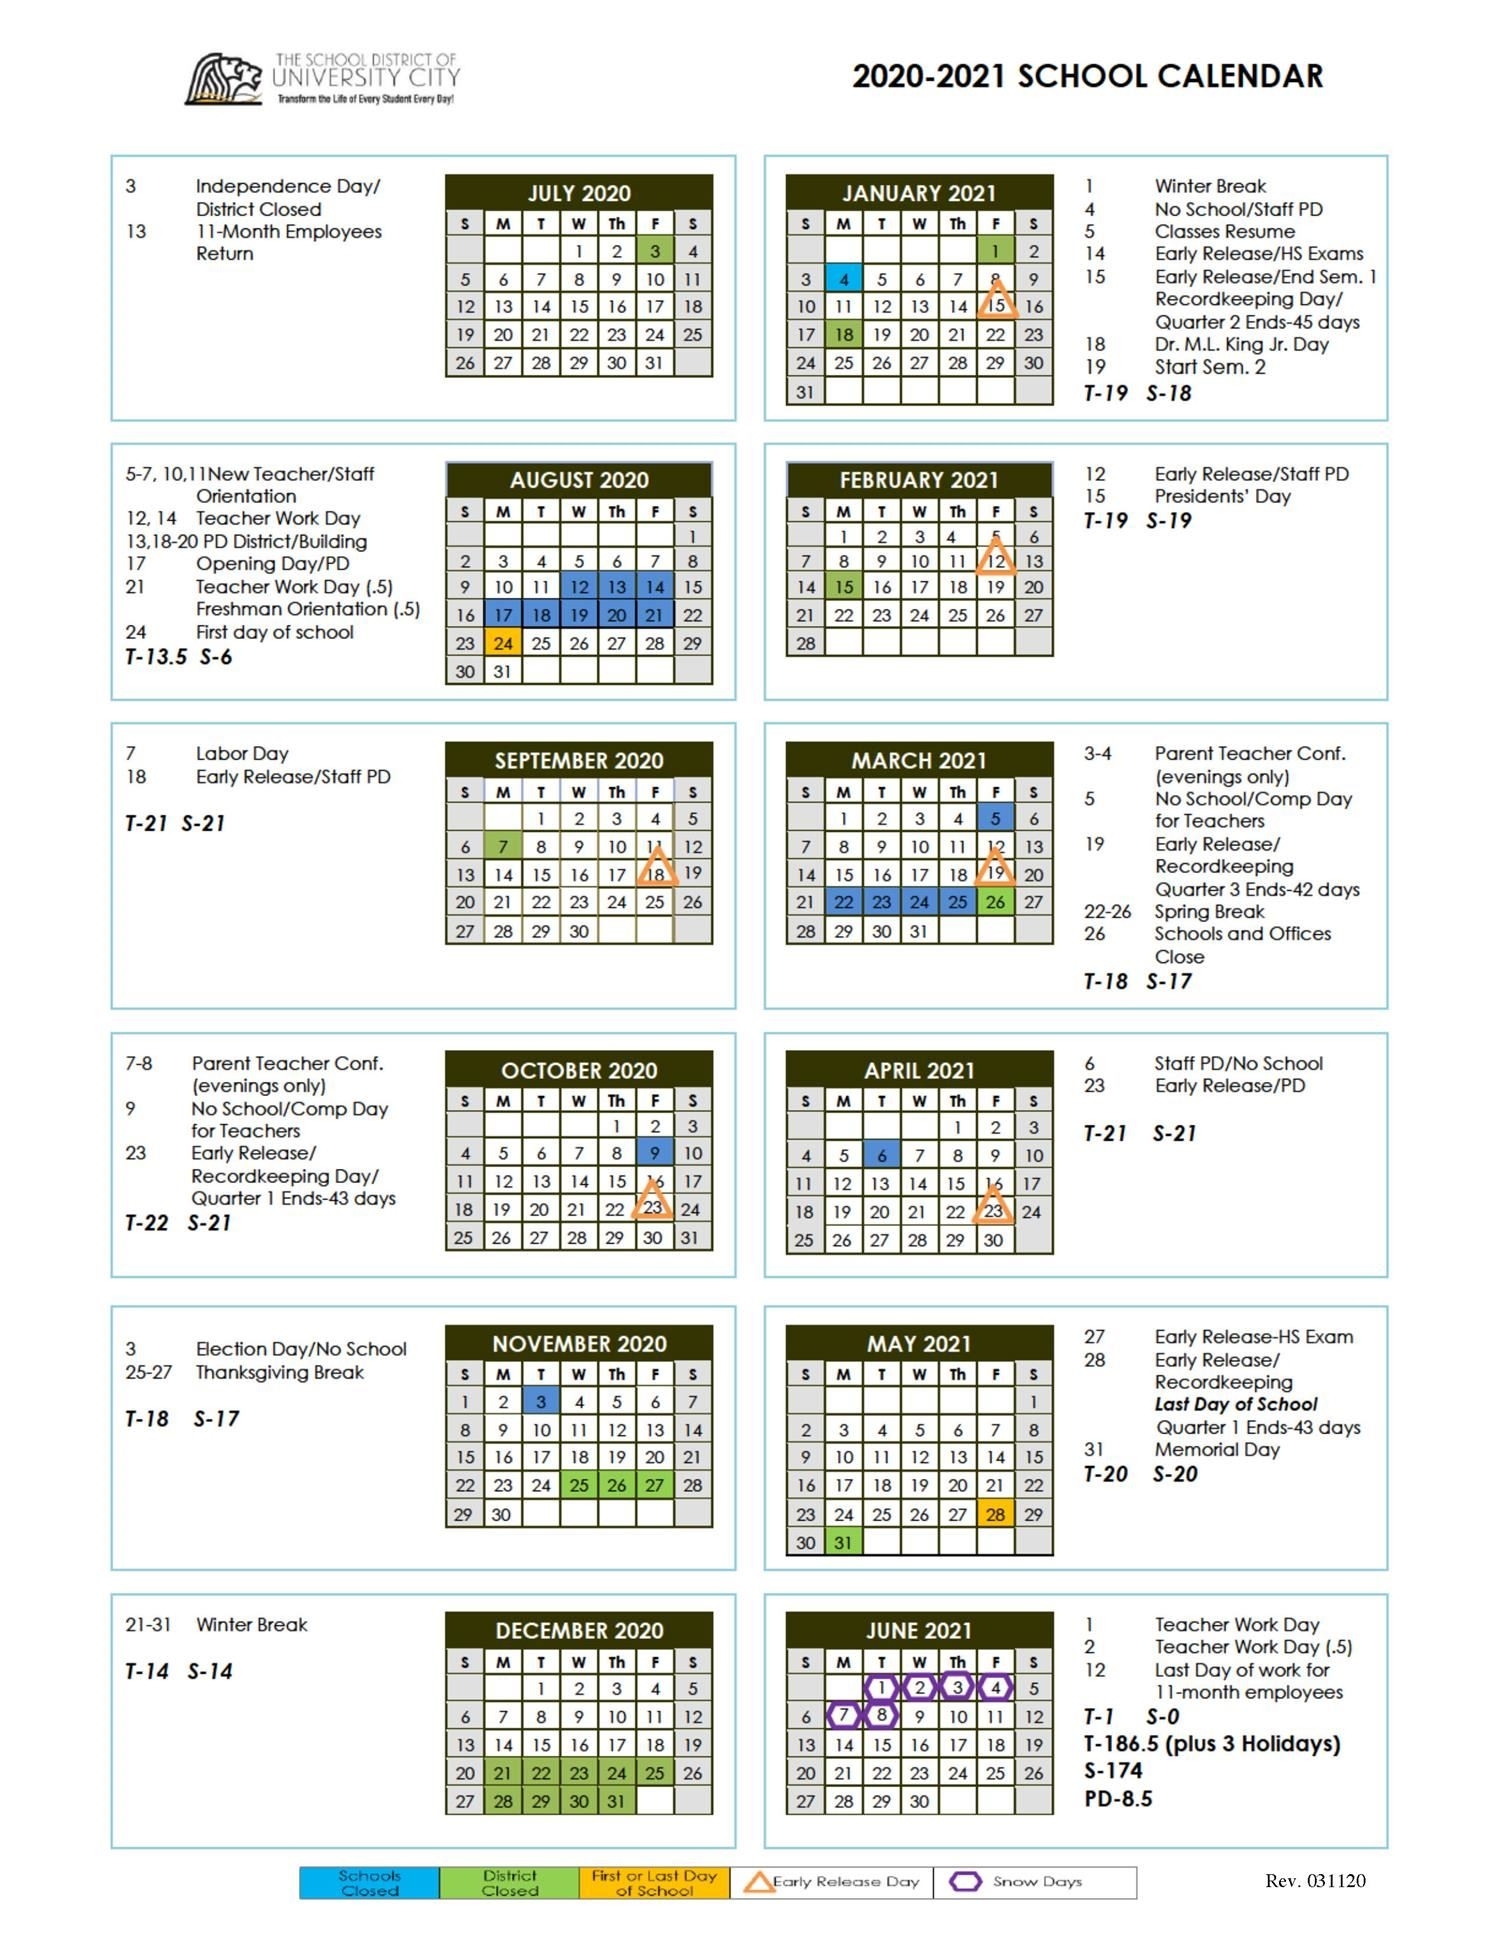 Hawaii Doe Calendar 2021 2021 Best Calendar Example